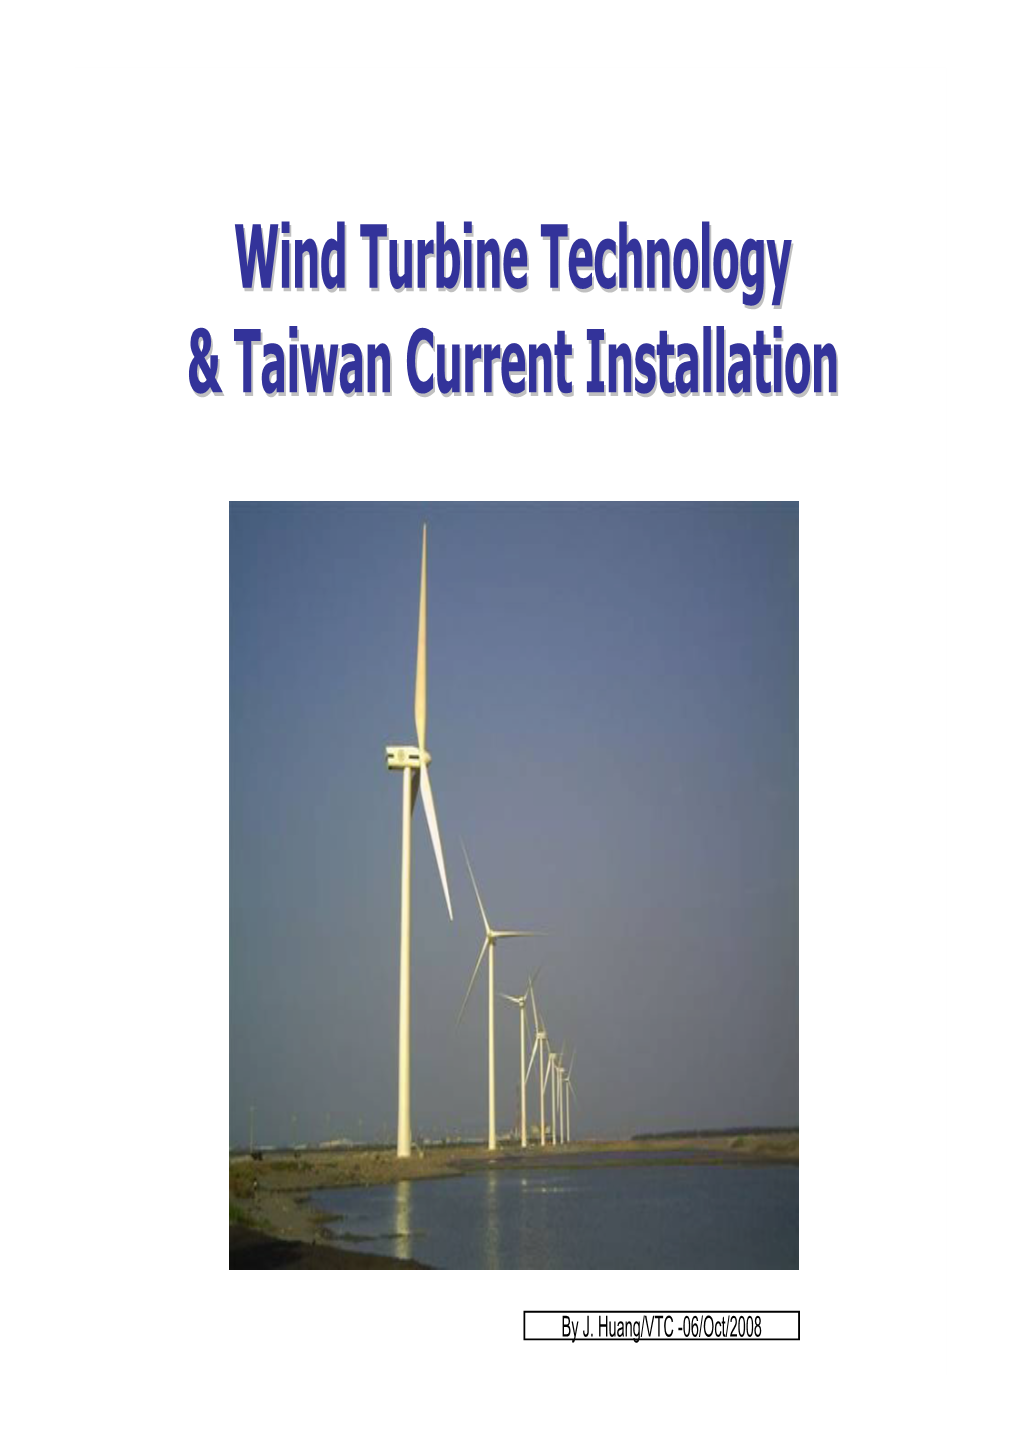 Wind Turbine Technology & Taiwan Current Installation